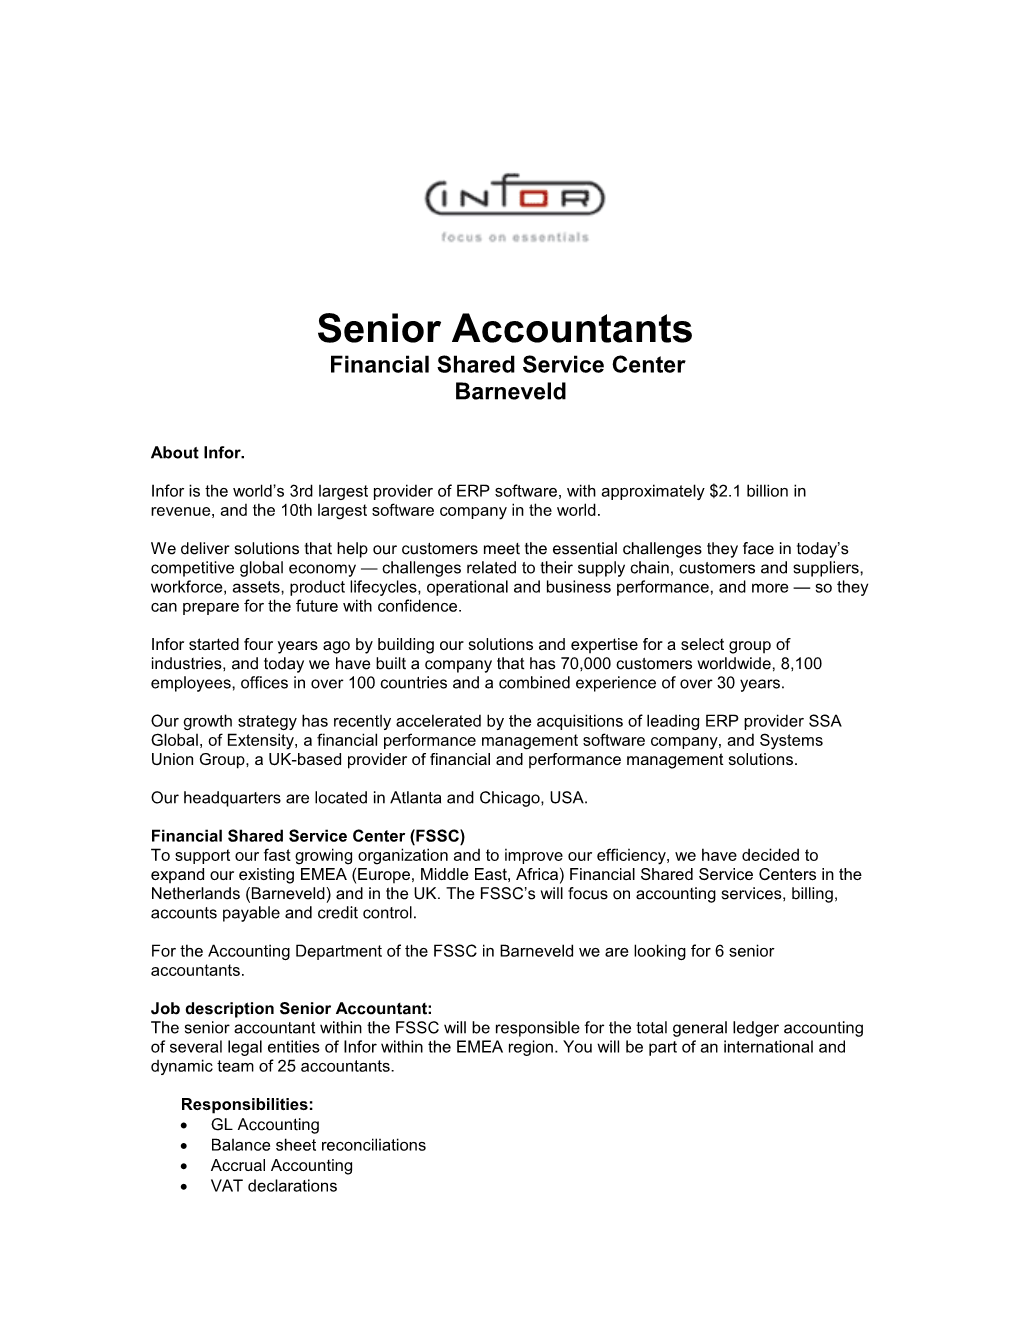 Job Description Senior Accountant